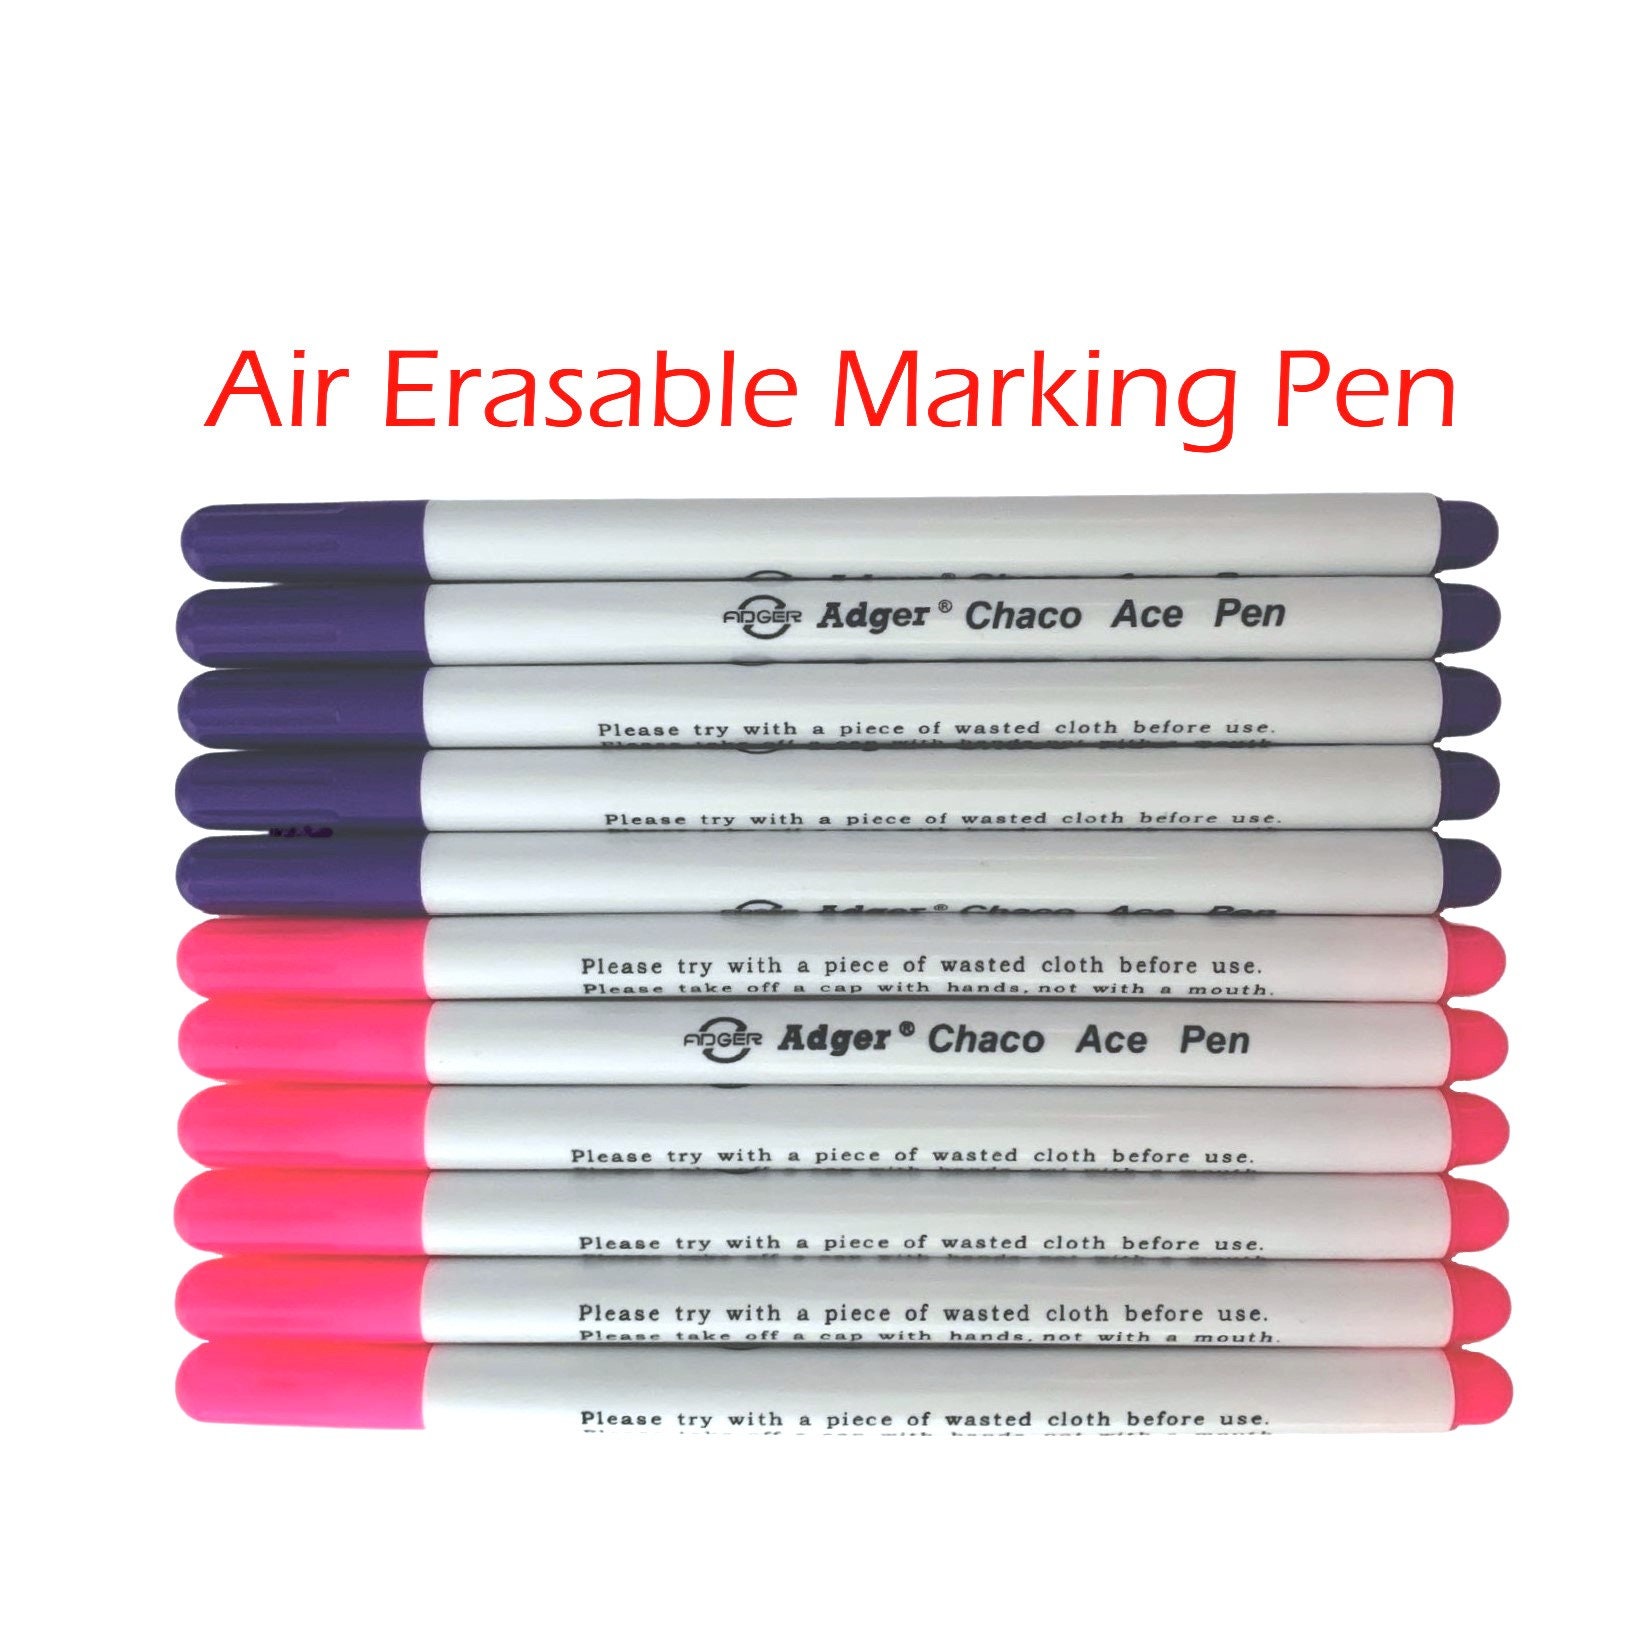 Dritz Fabric Marking Pen Mark B Gone Disappearing Ink Dritz Air